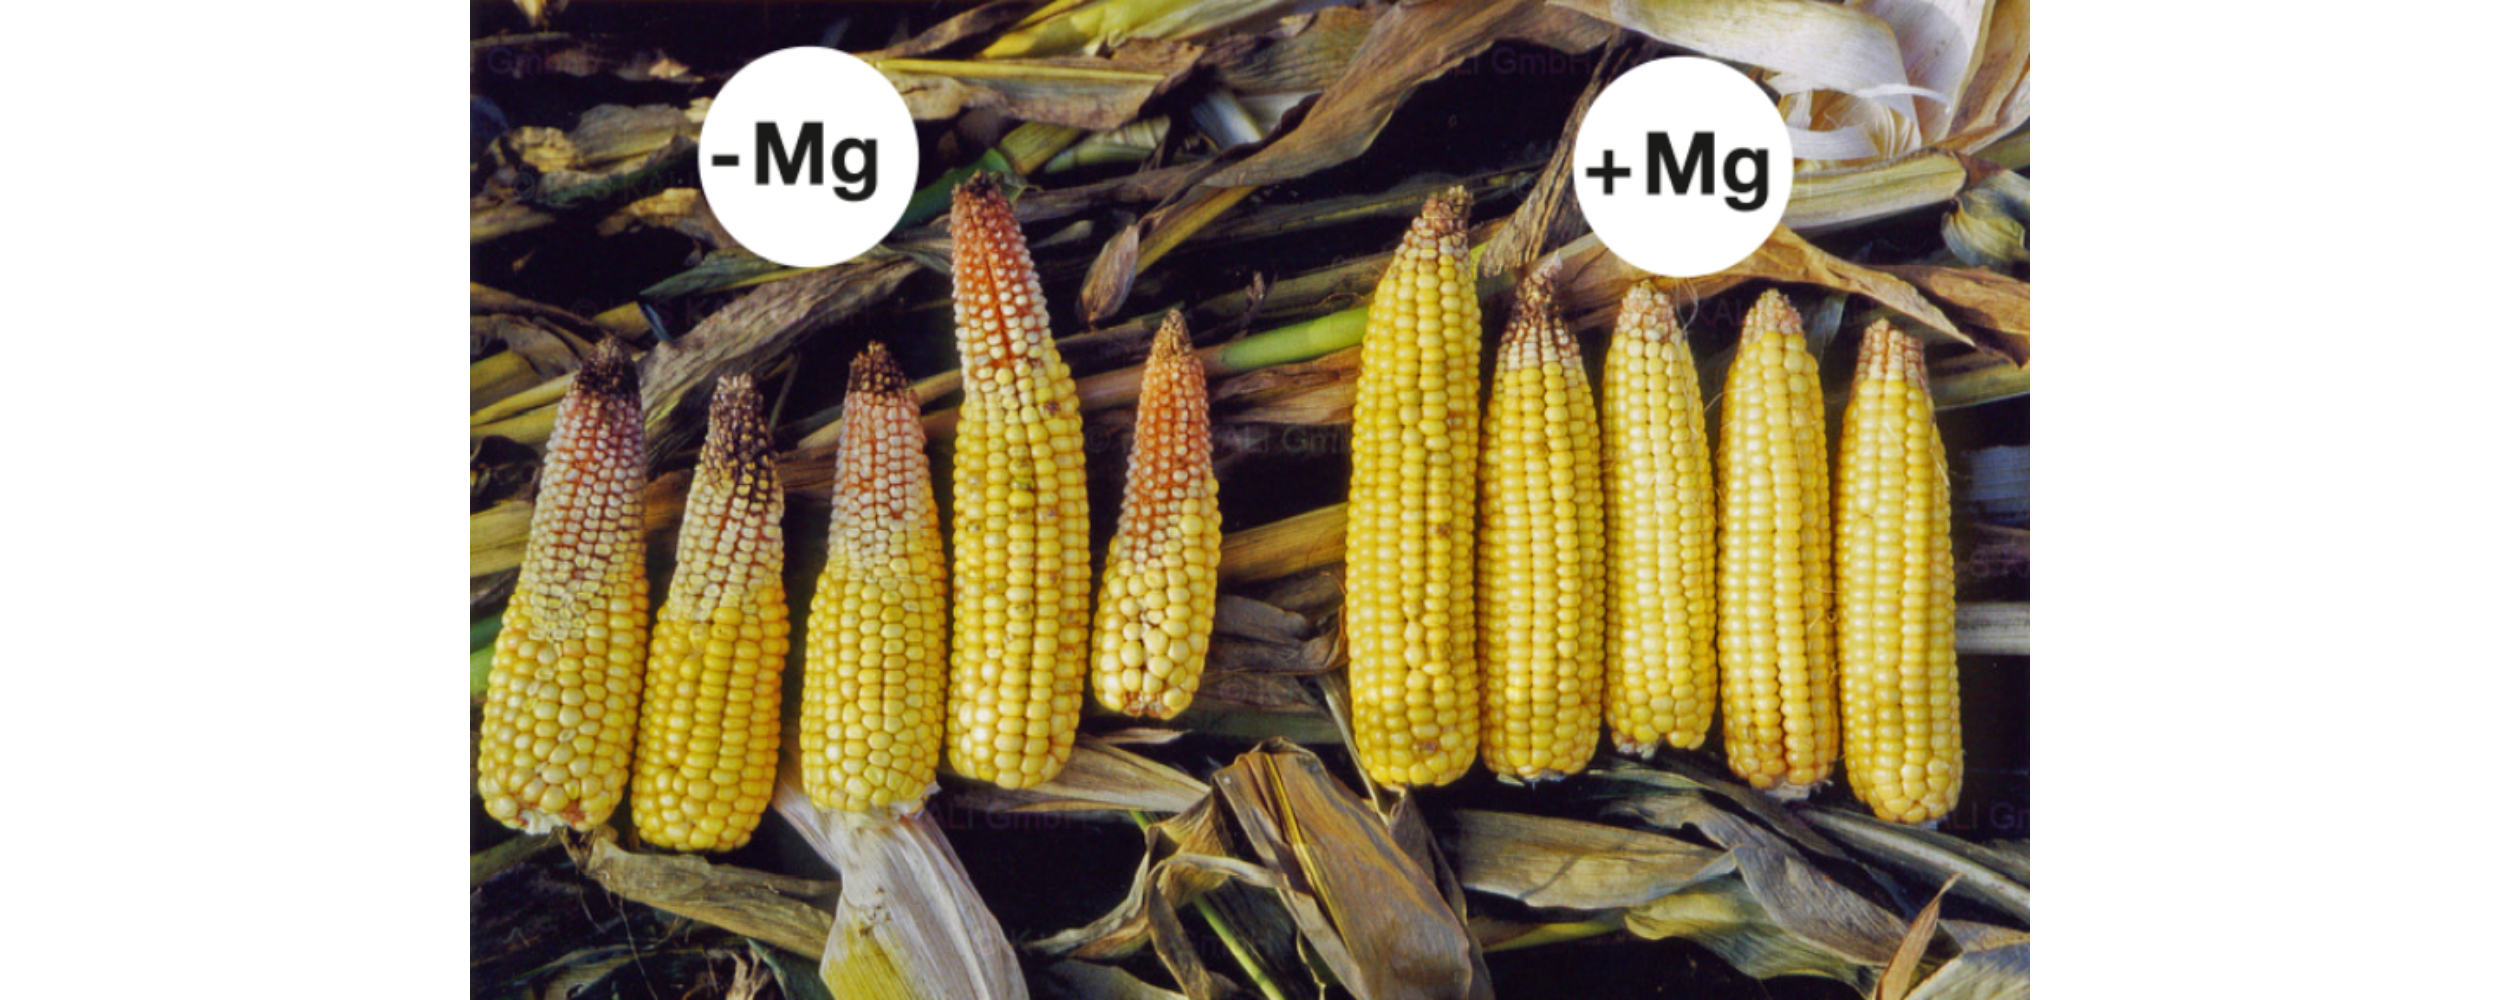 Magnesium fördert die Kolbenfüllung bei Mais. Bei Magnesiummangel (links) verkümmerte ein Teil der Körner, da nicht genug Kohlenhydrate zu den Kolben transportiert wurden.